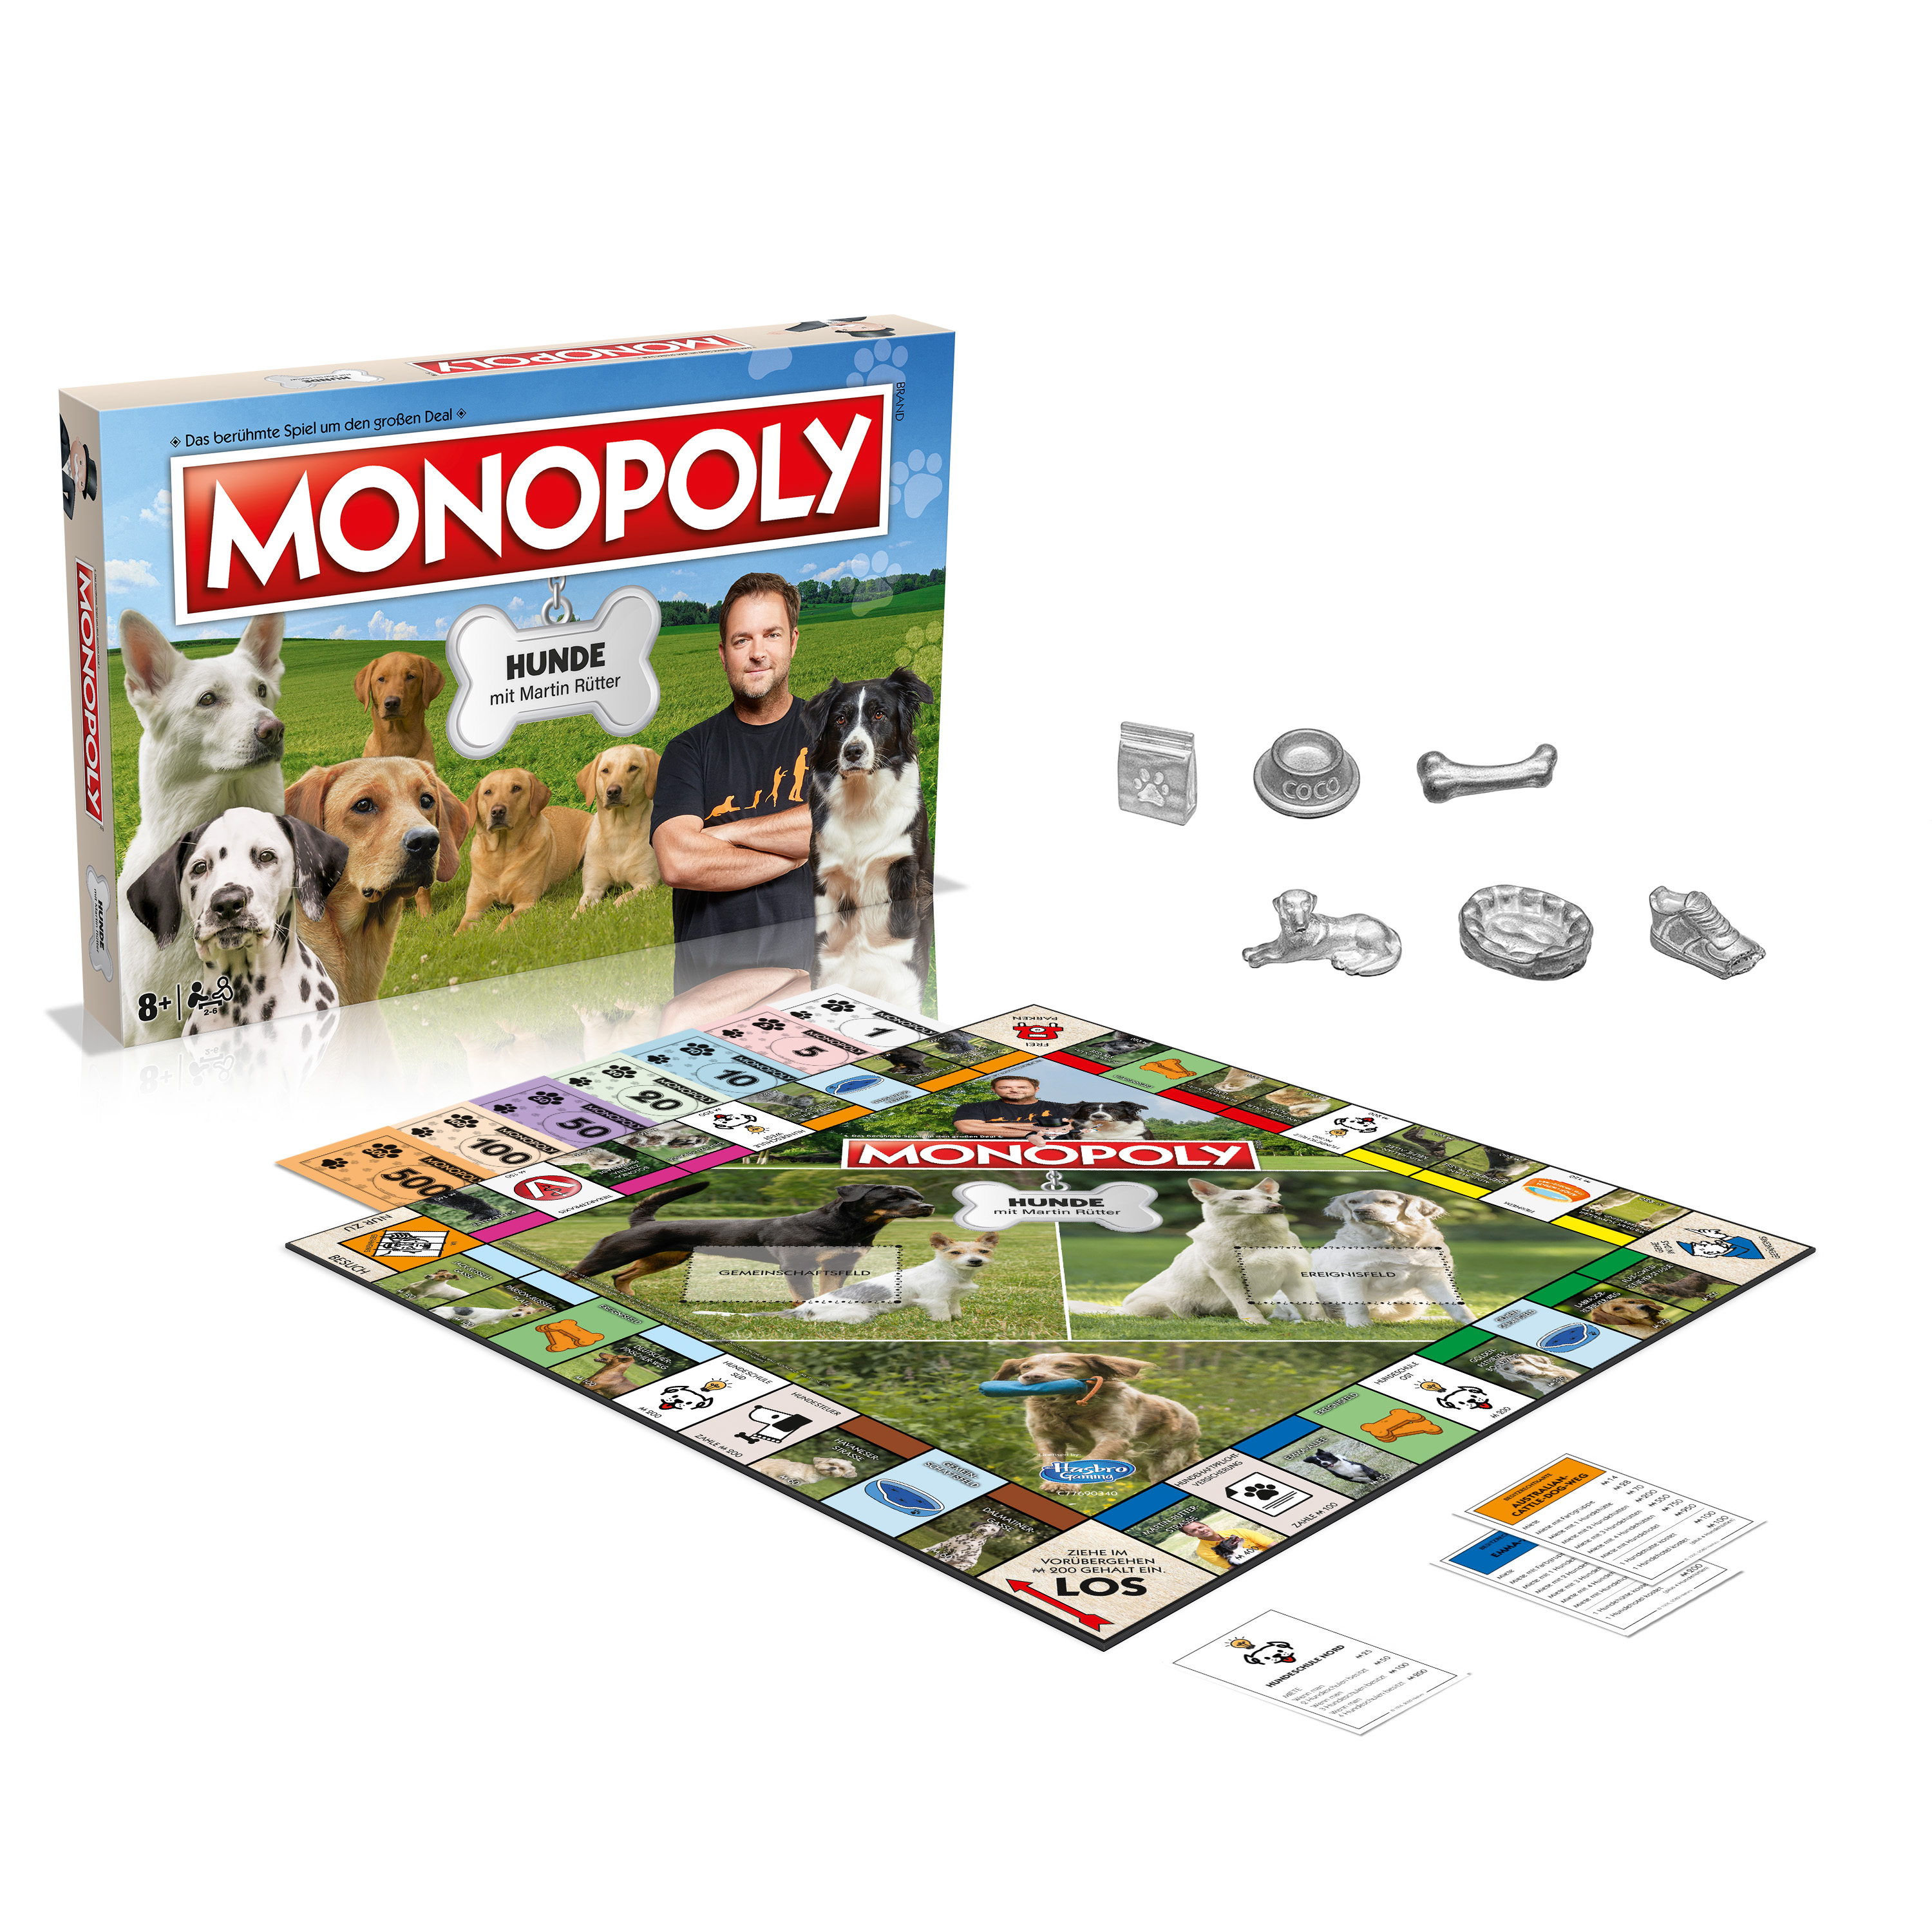 MOVES Martin Rütter) WINNING - Brettspiel (mit Monopoly Hunde